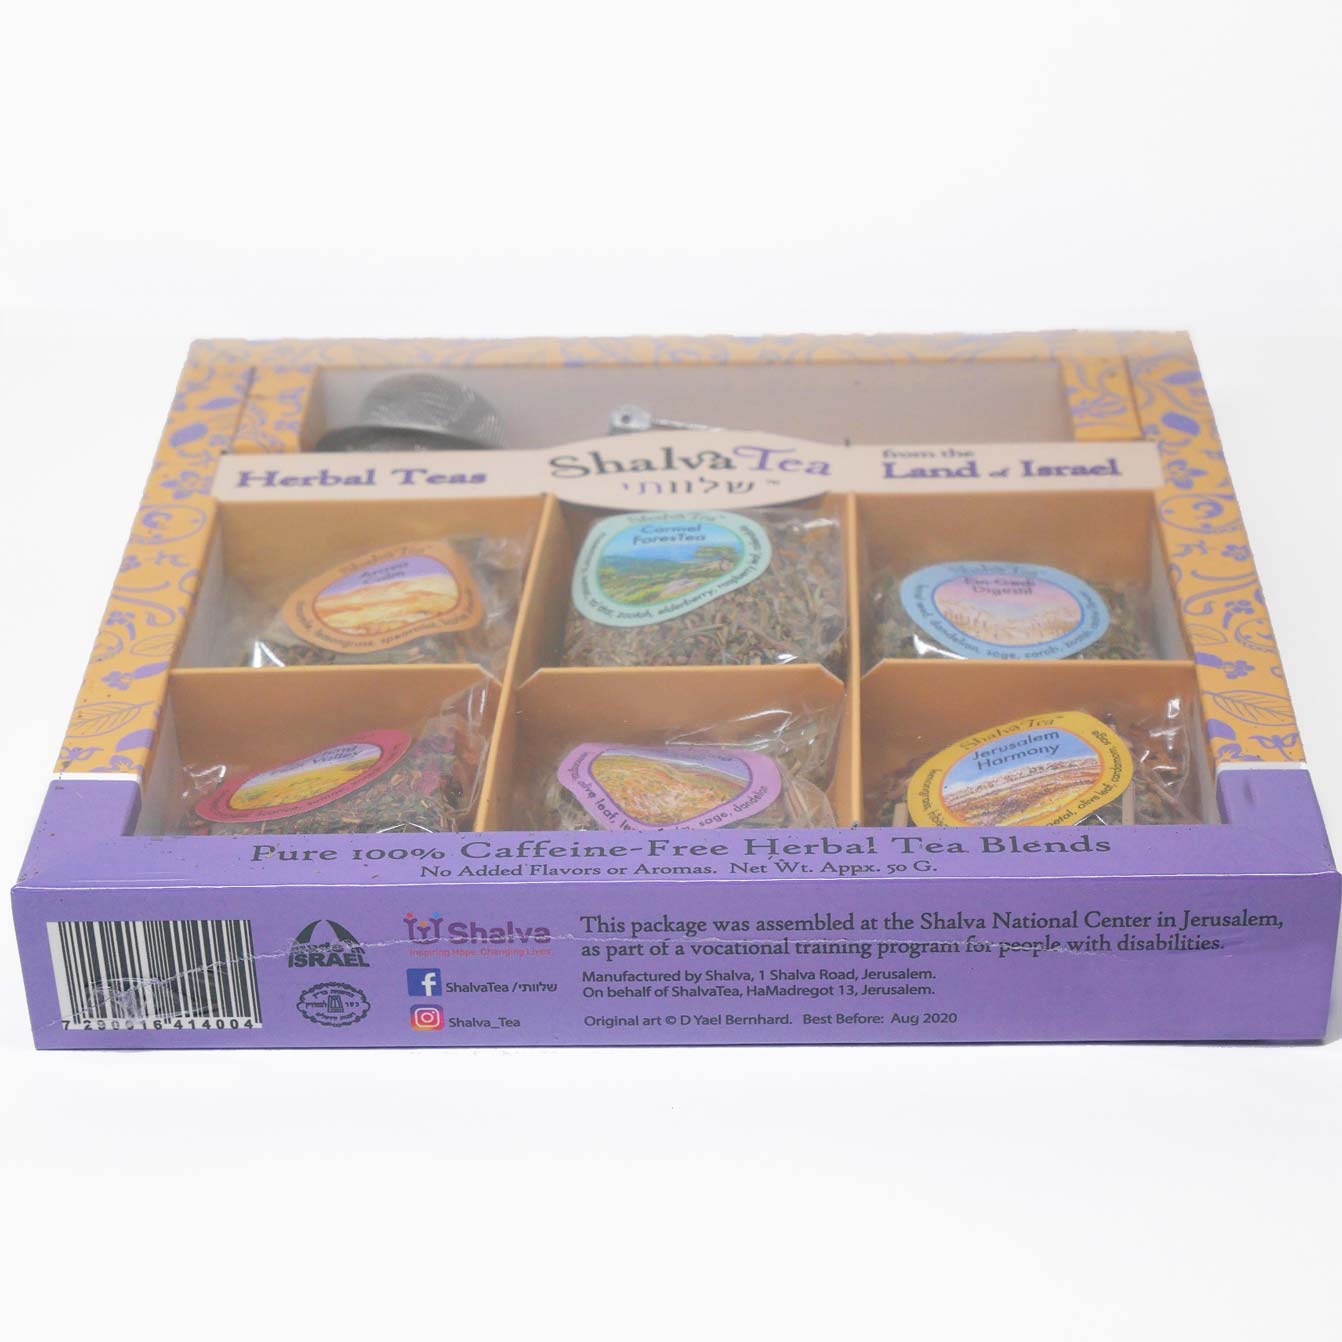 Shalva Tea Sampler Gift Pack - ShalvaTea Kosher Israeli Herbal Teas